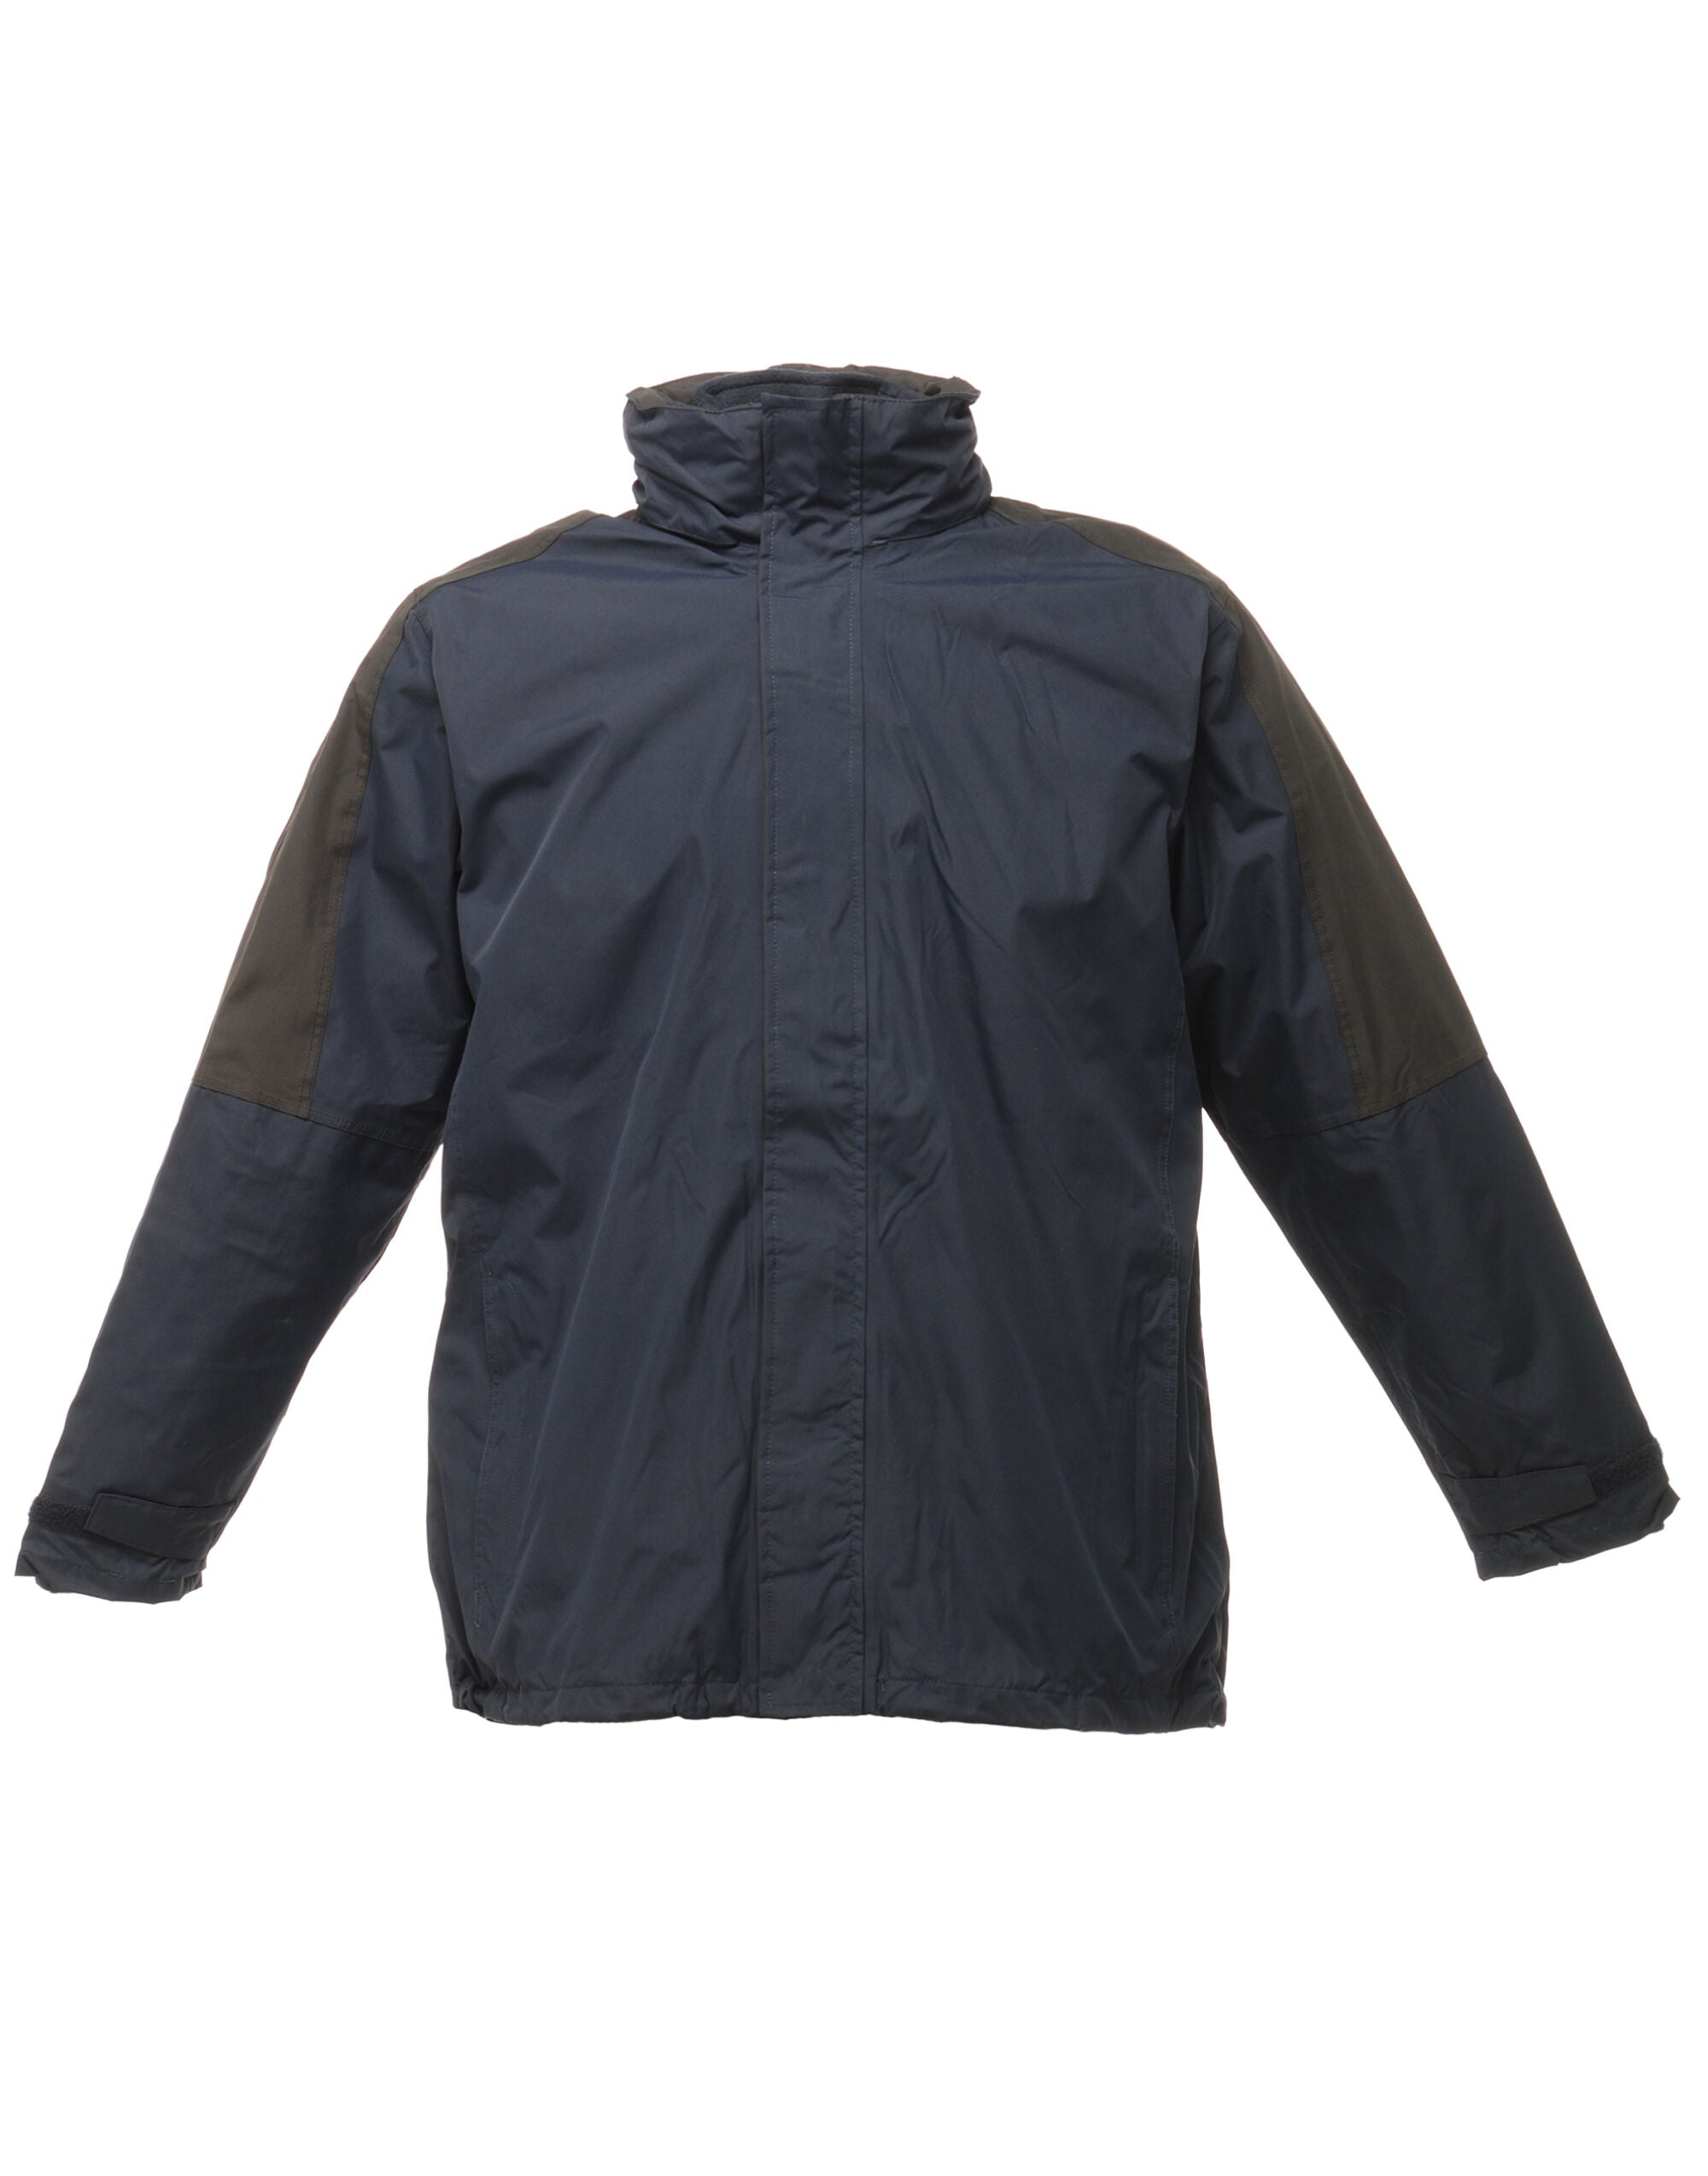 Regatta Professional Defender III Men's 3-in-1 Jacket Waterproof Hydrafort 5000 peached Polyester fabric (TRA130)